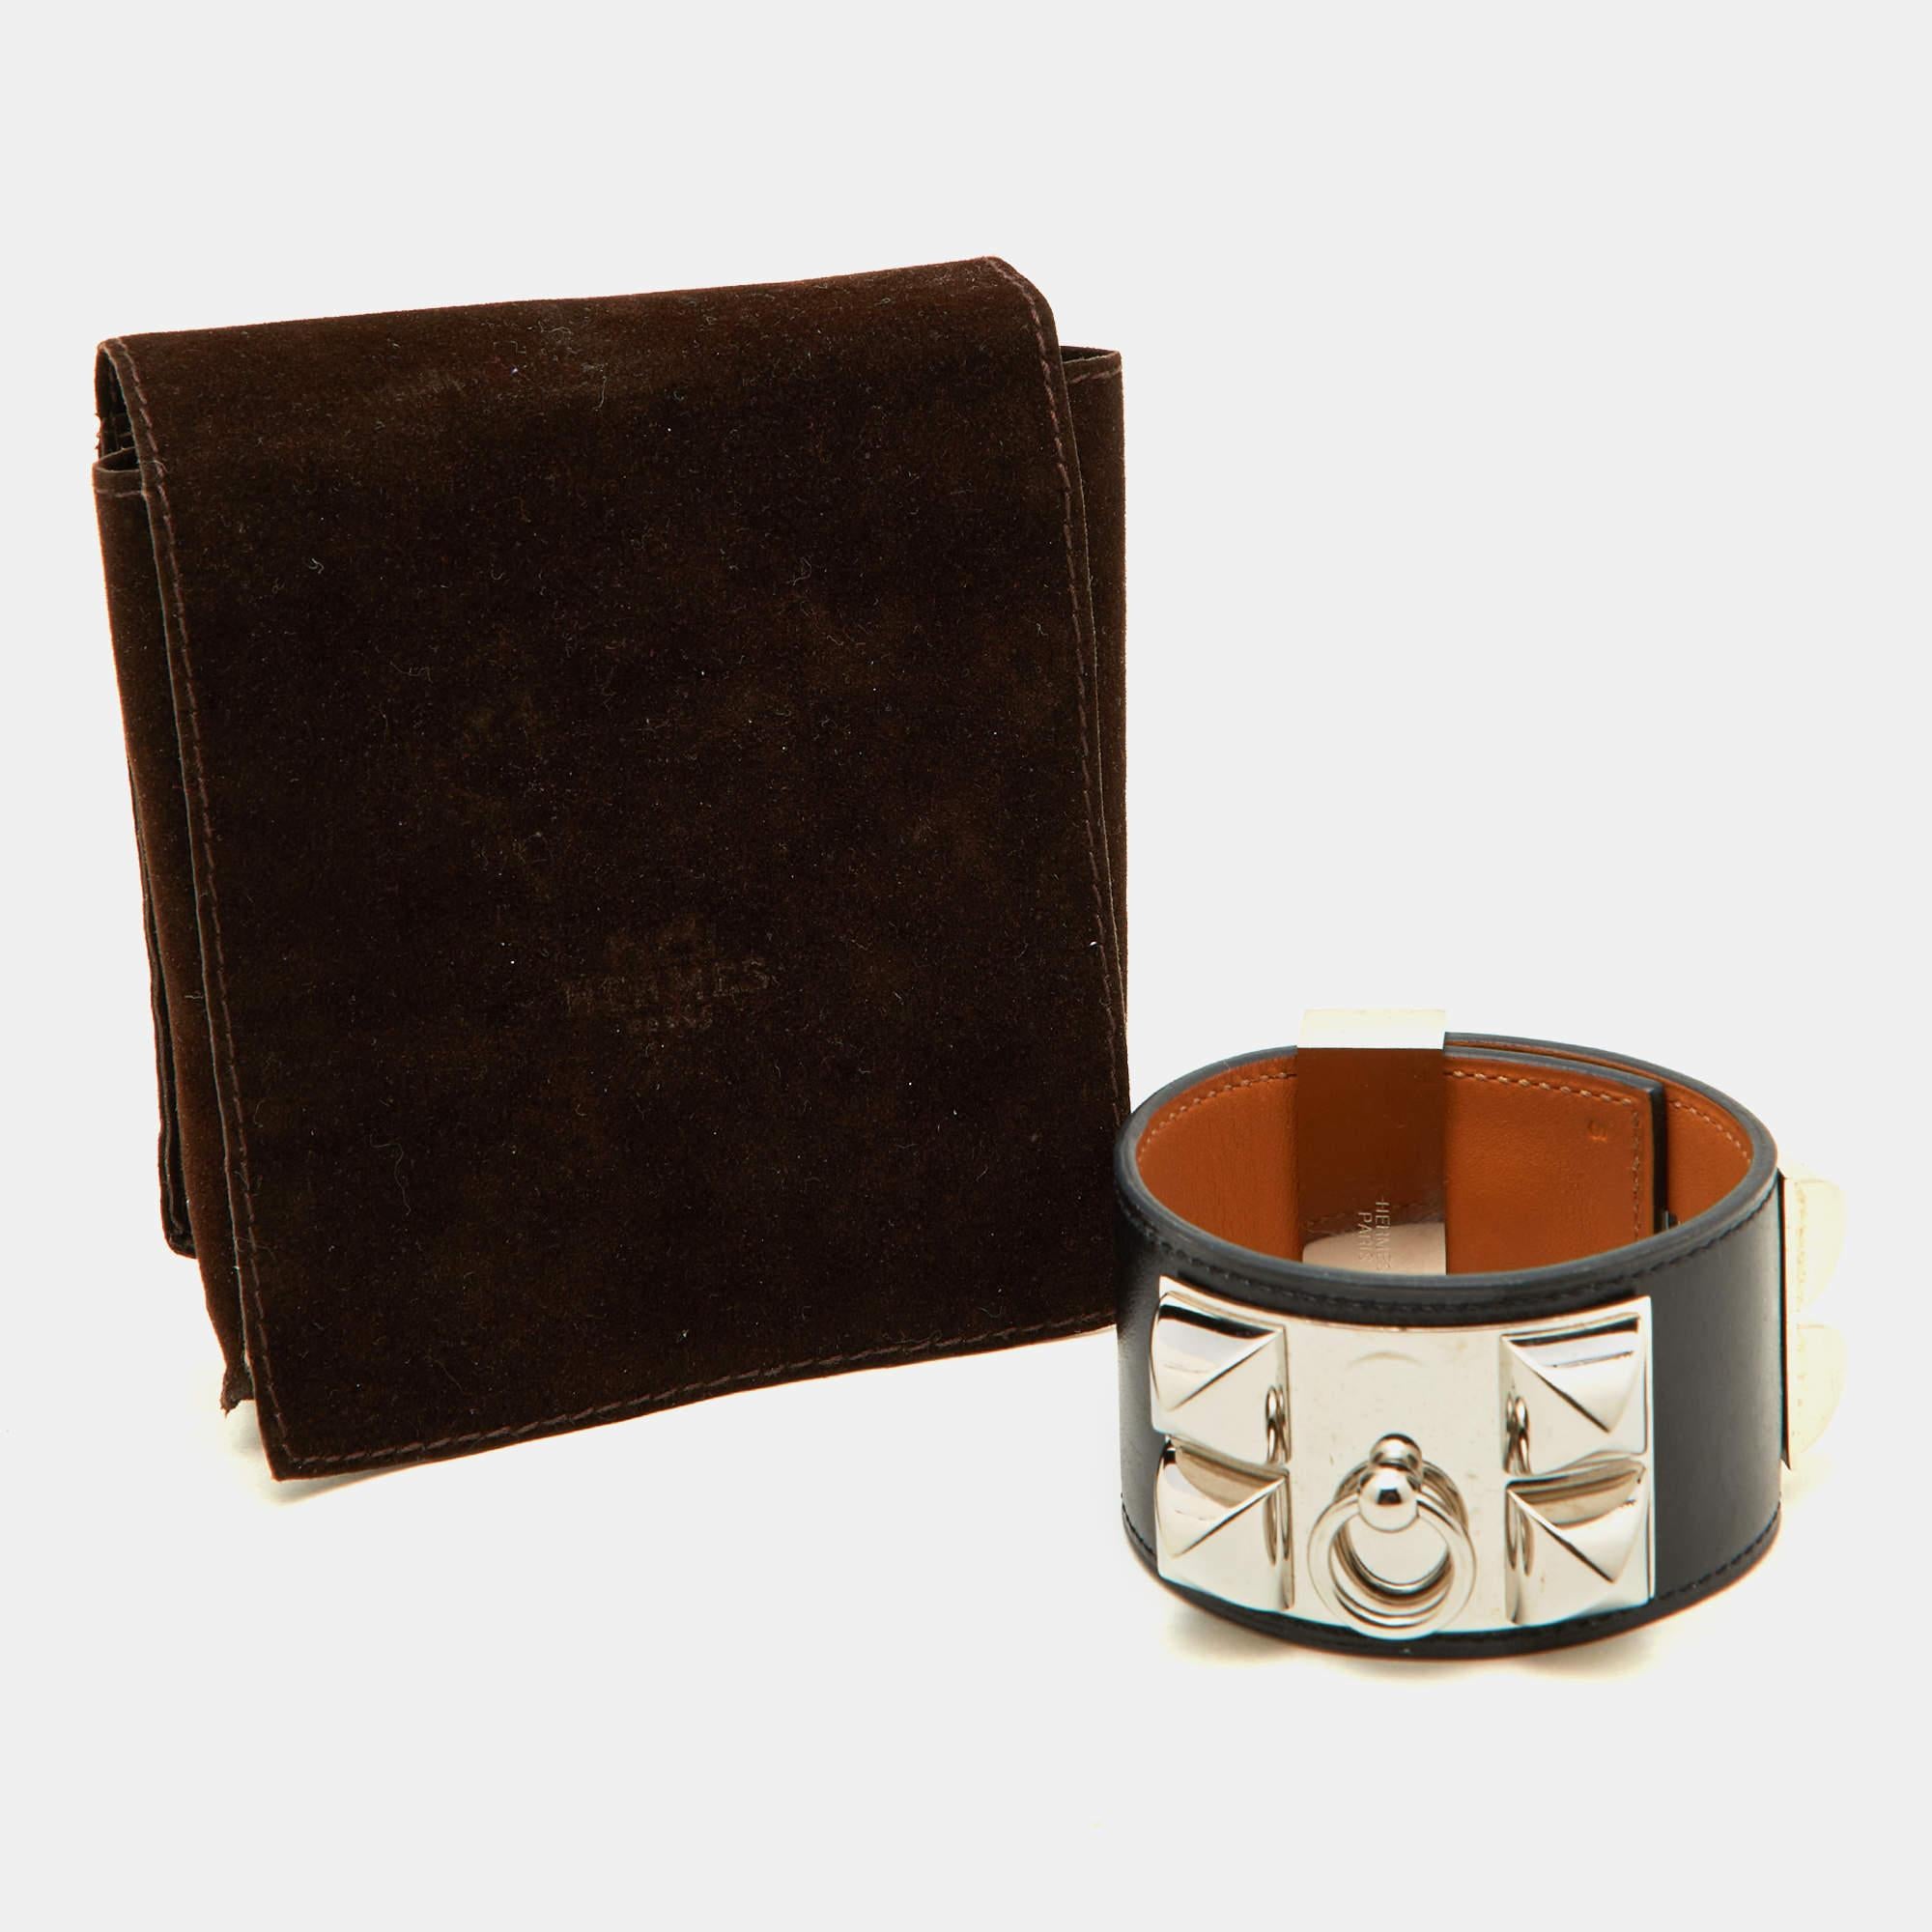 Hermes Collier De Chien Black Leather Palladium Plated Wide Cuff Bracelet S 1